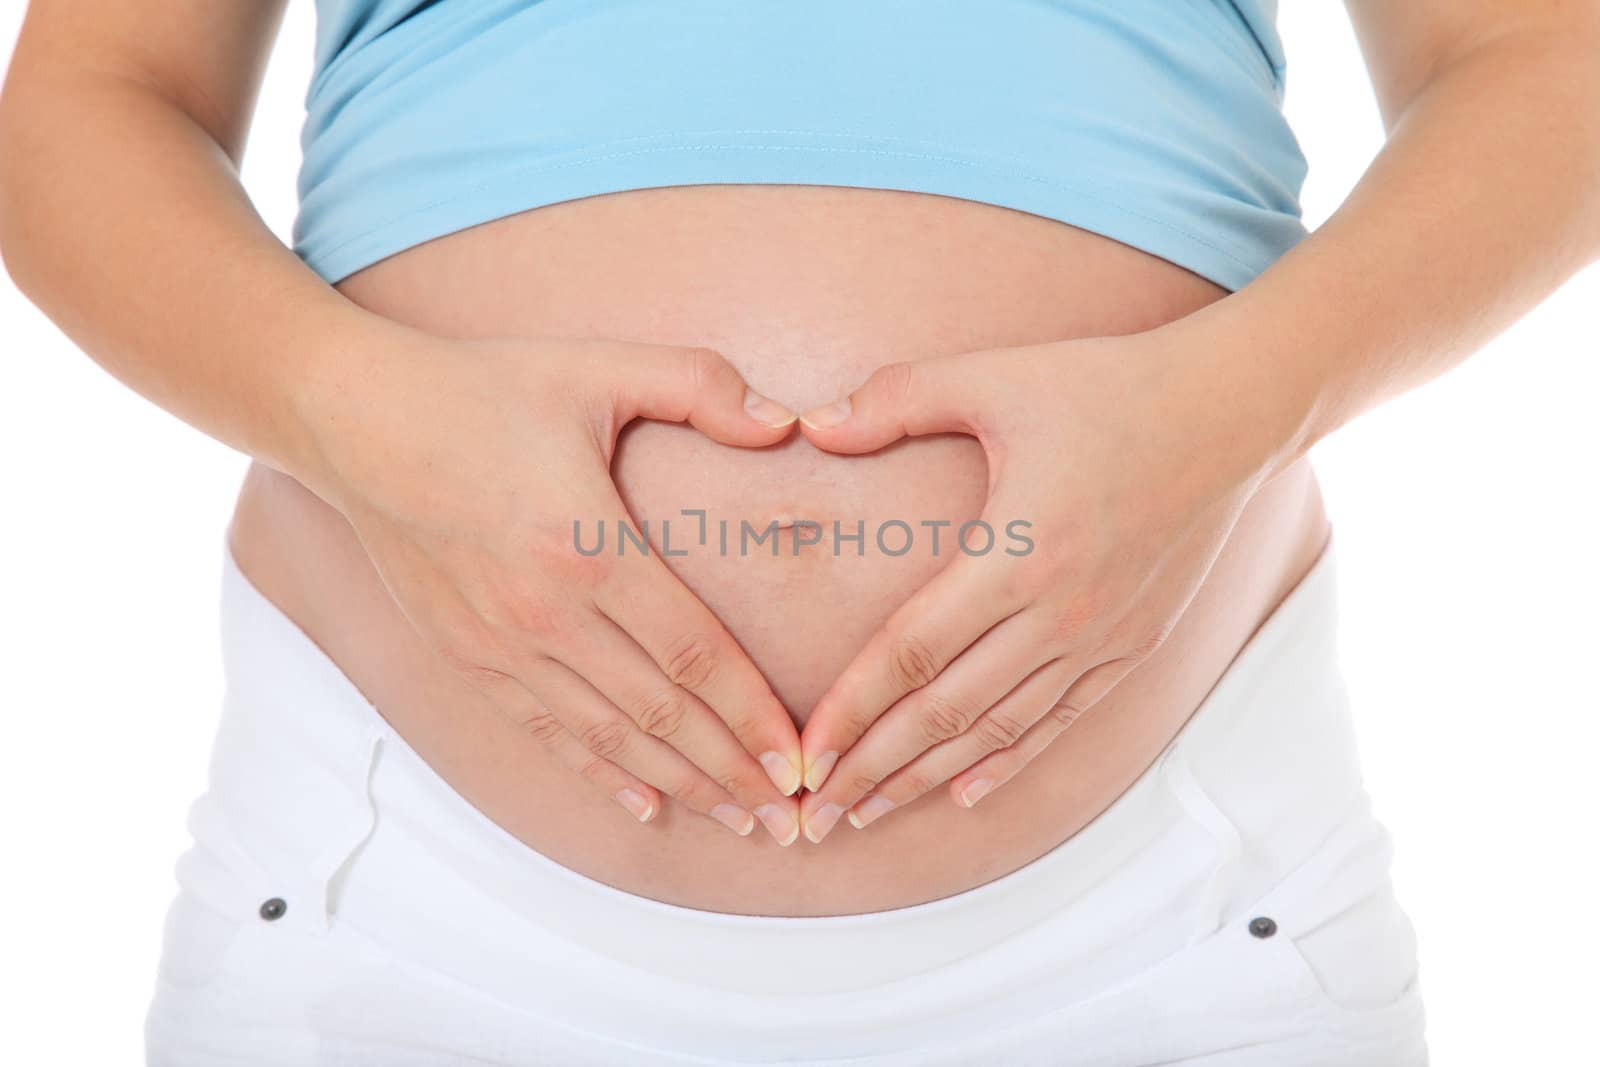 Pregnant woman by kaarsten